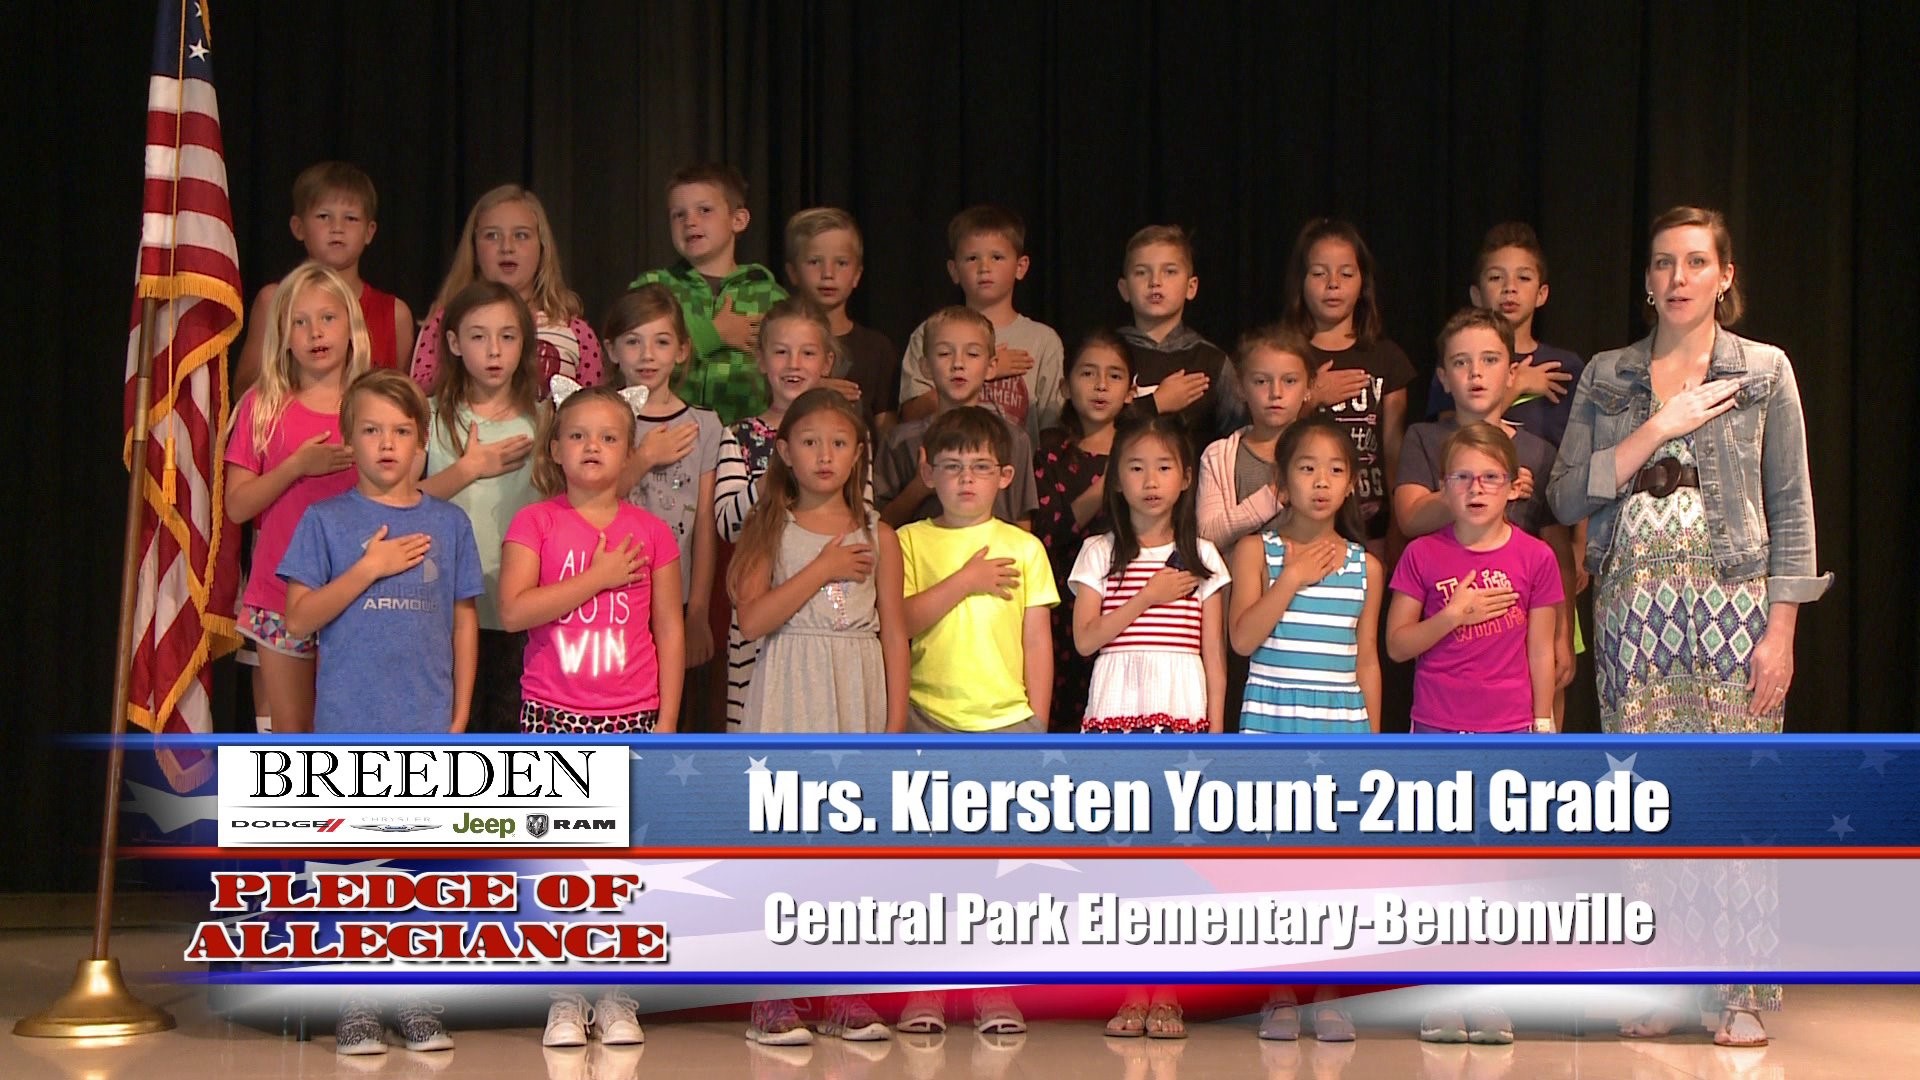 Mrs. Kiersten Yount  2nd Grade  Central Park Elementary - Bentonville